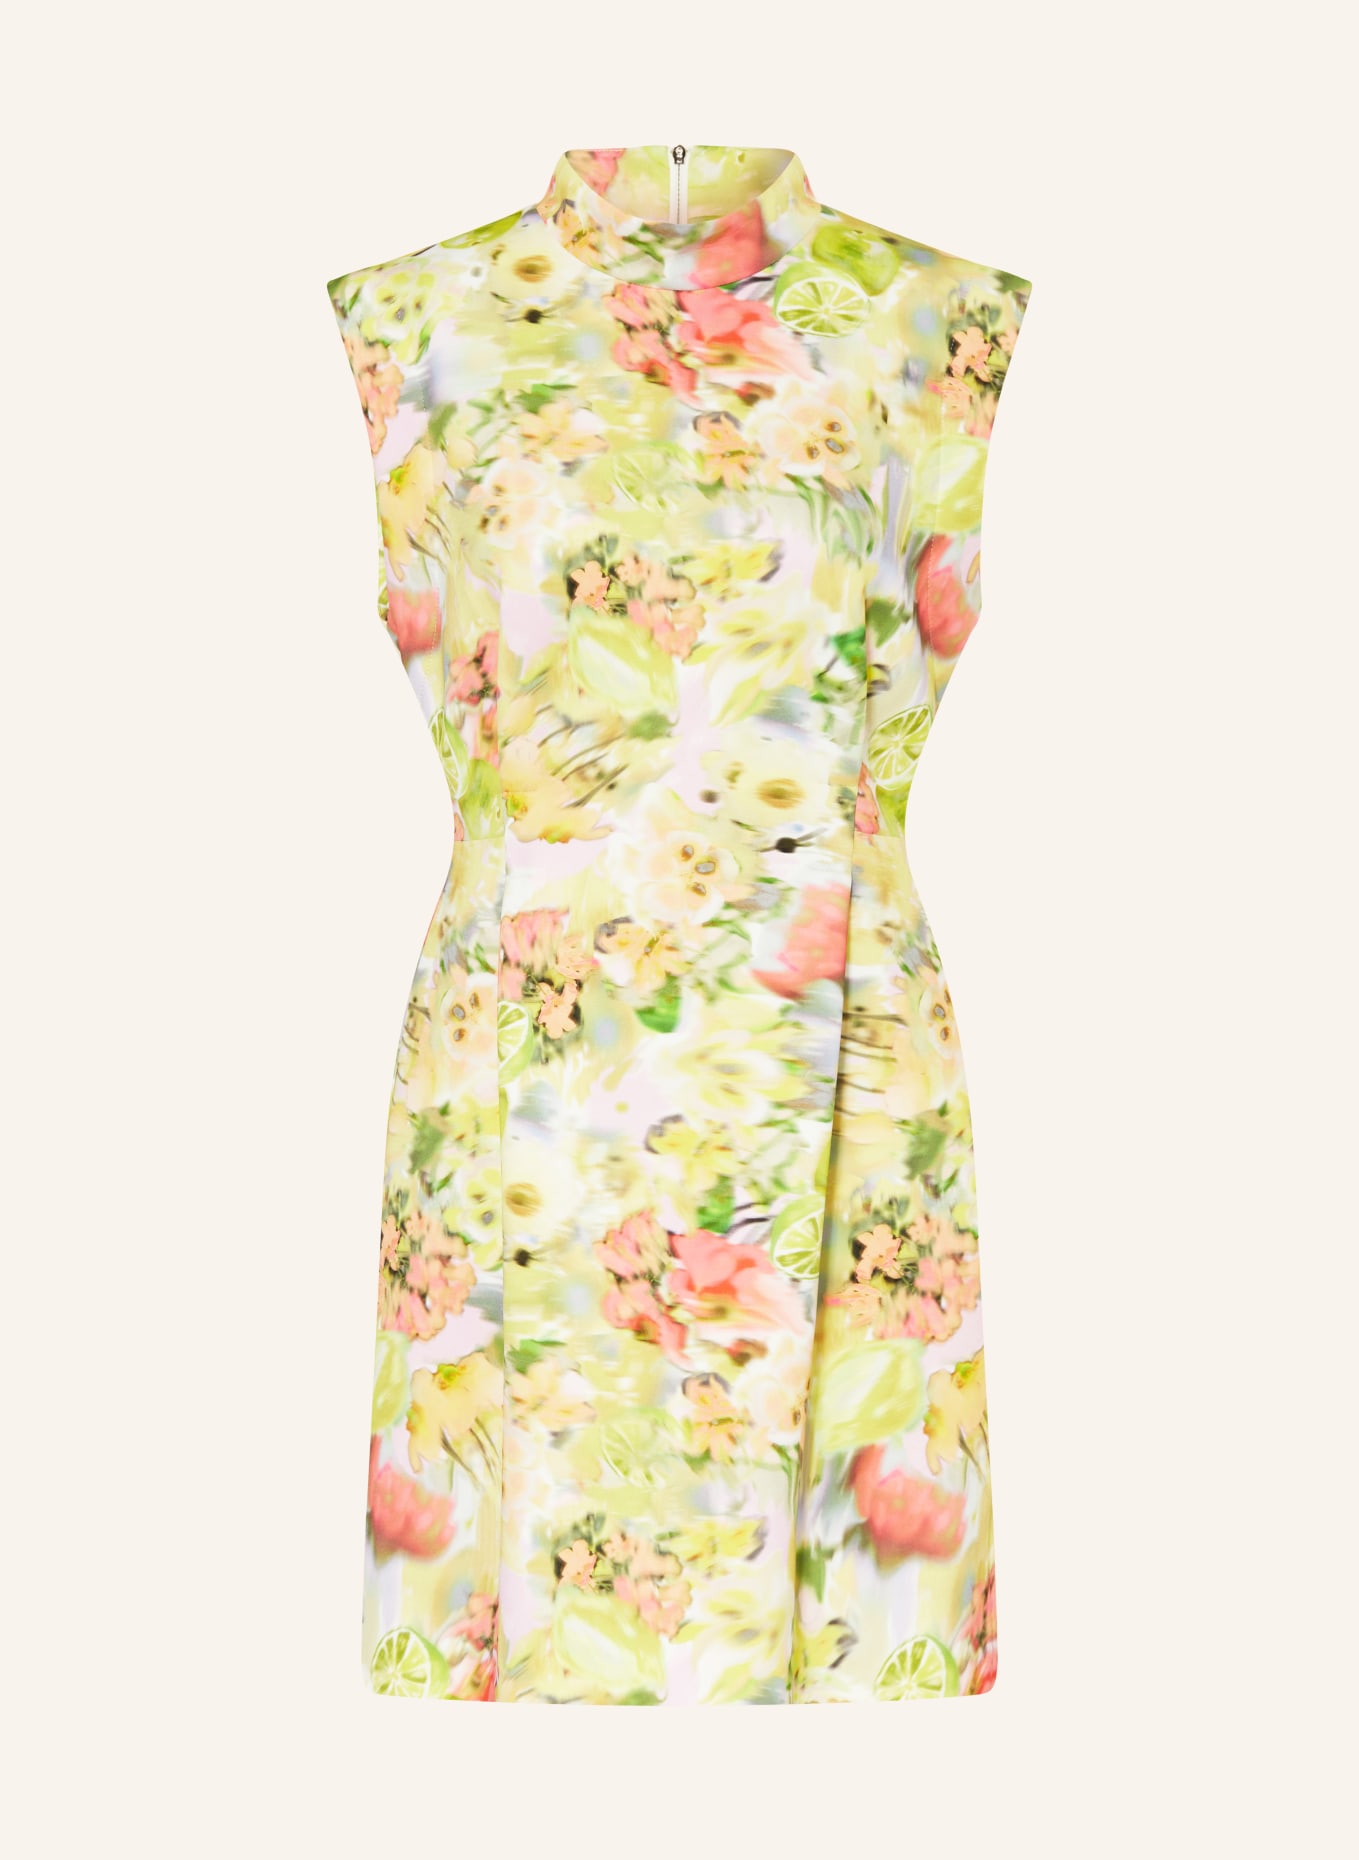 MARC CAIN Kleid, Farbe: 420 pale lemon (Bild 1)